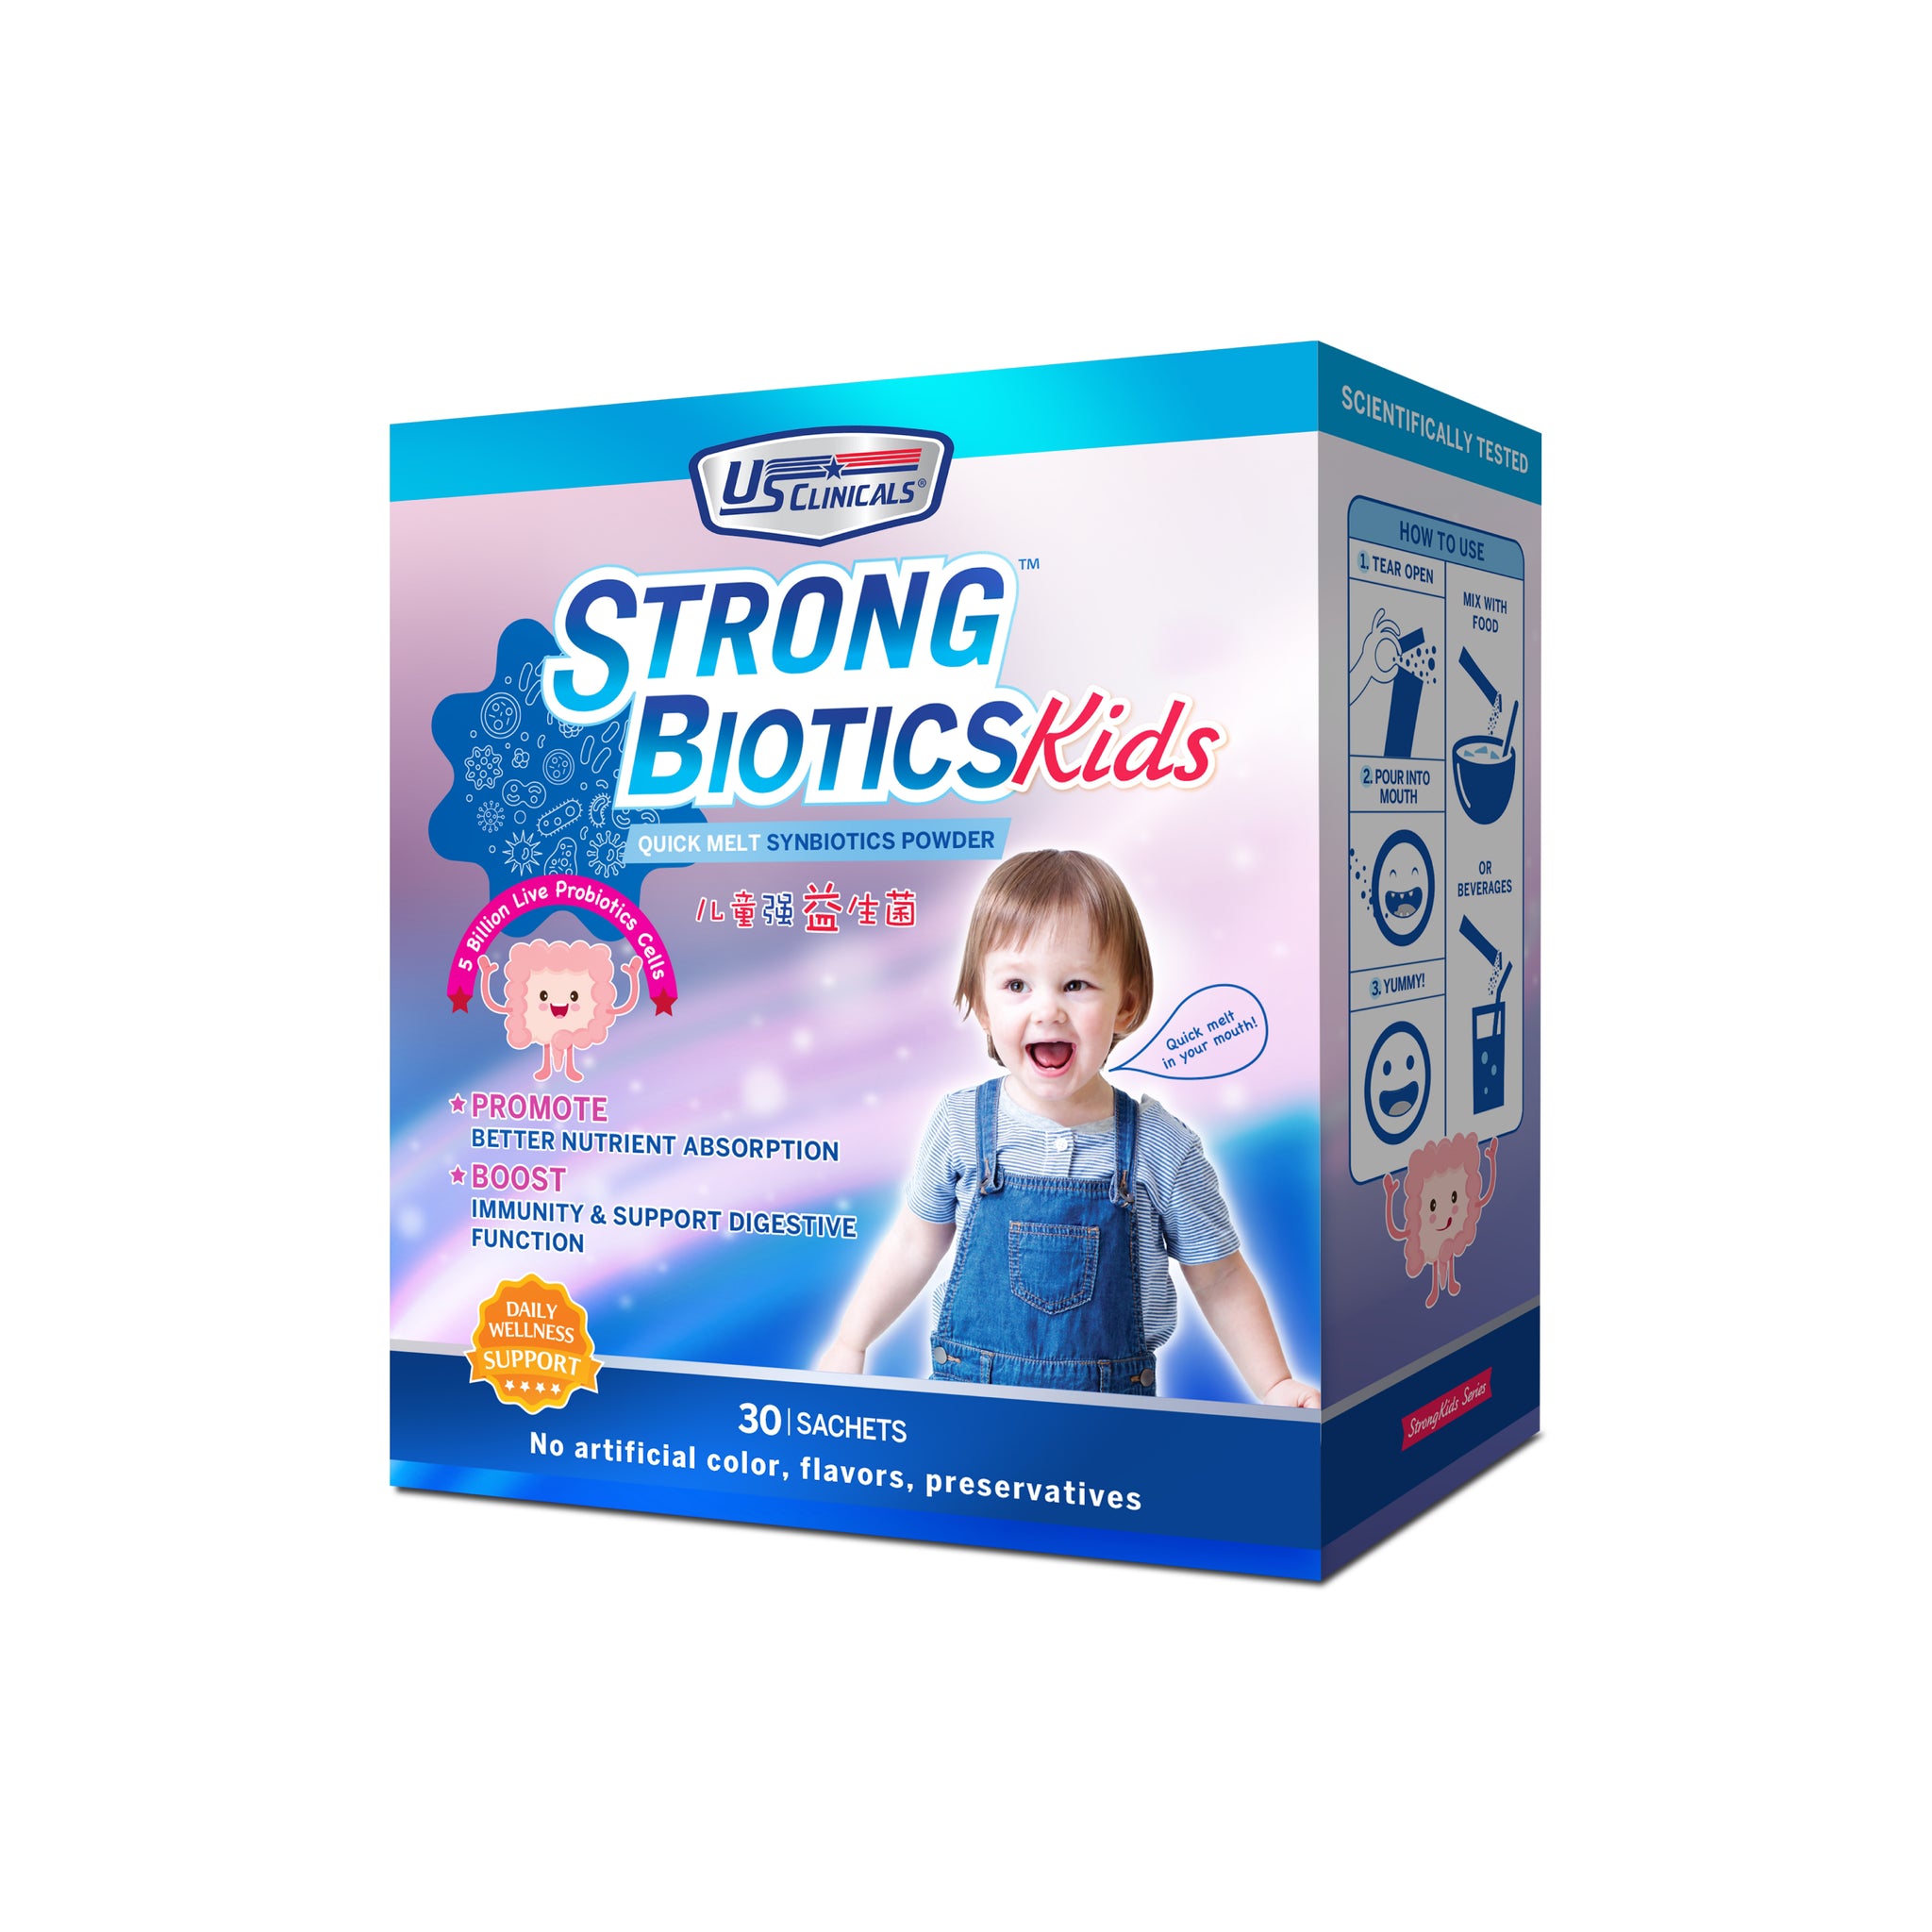 US Clinicals® StrongBiotics™ Kids.